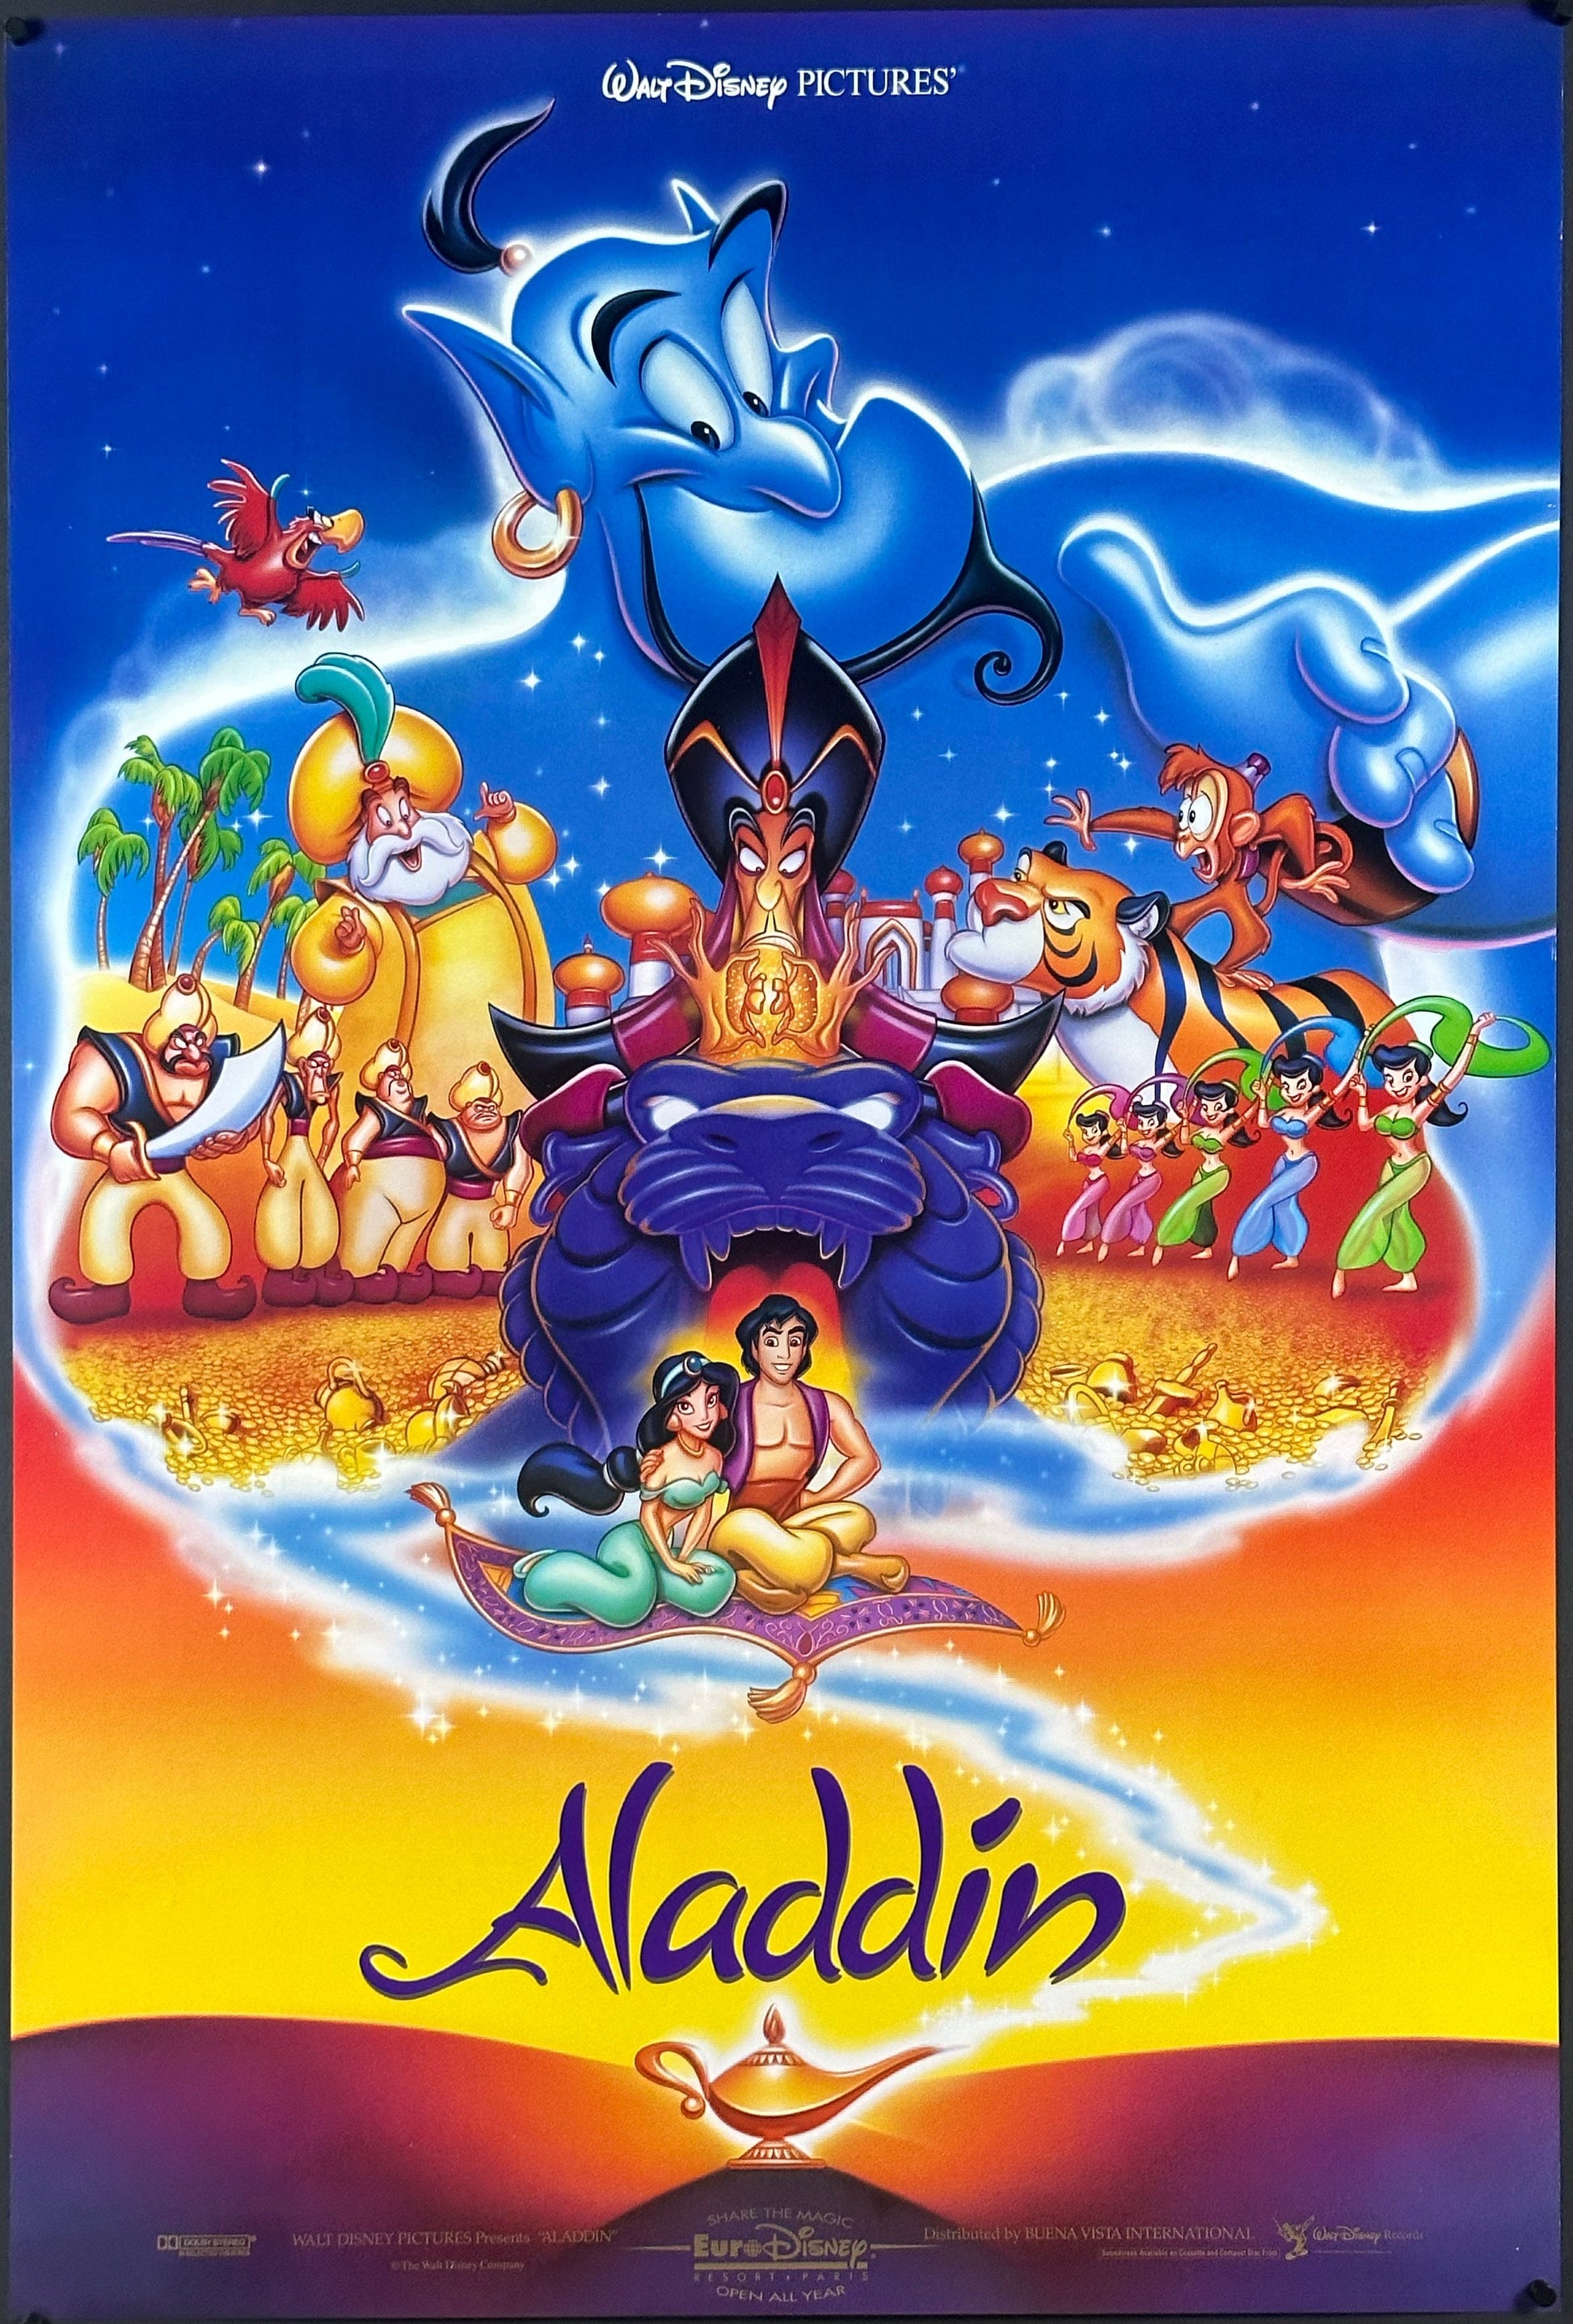 Aladdin - posterpalace.com